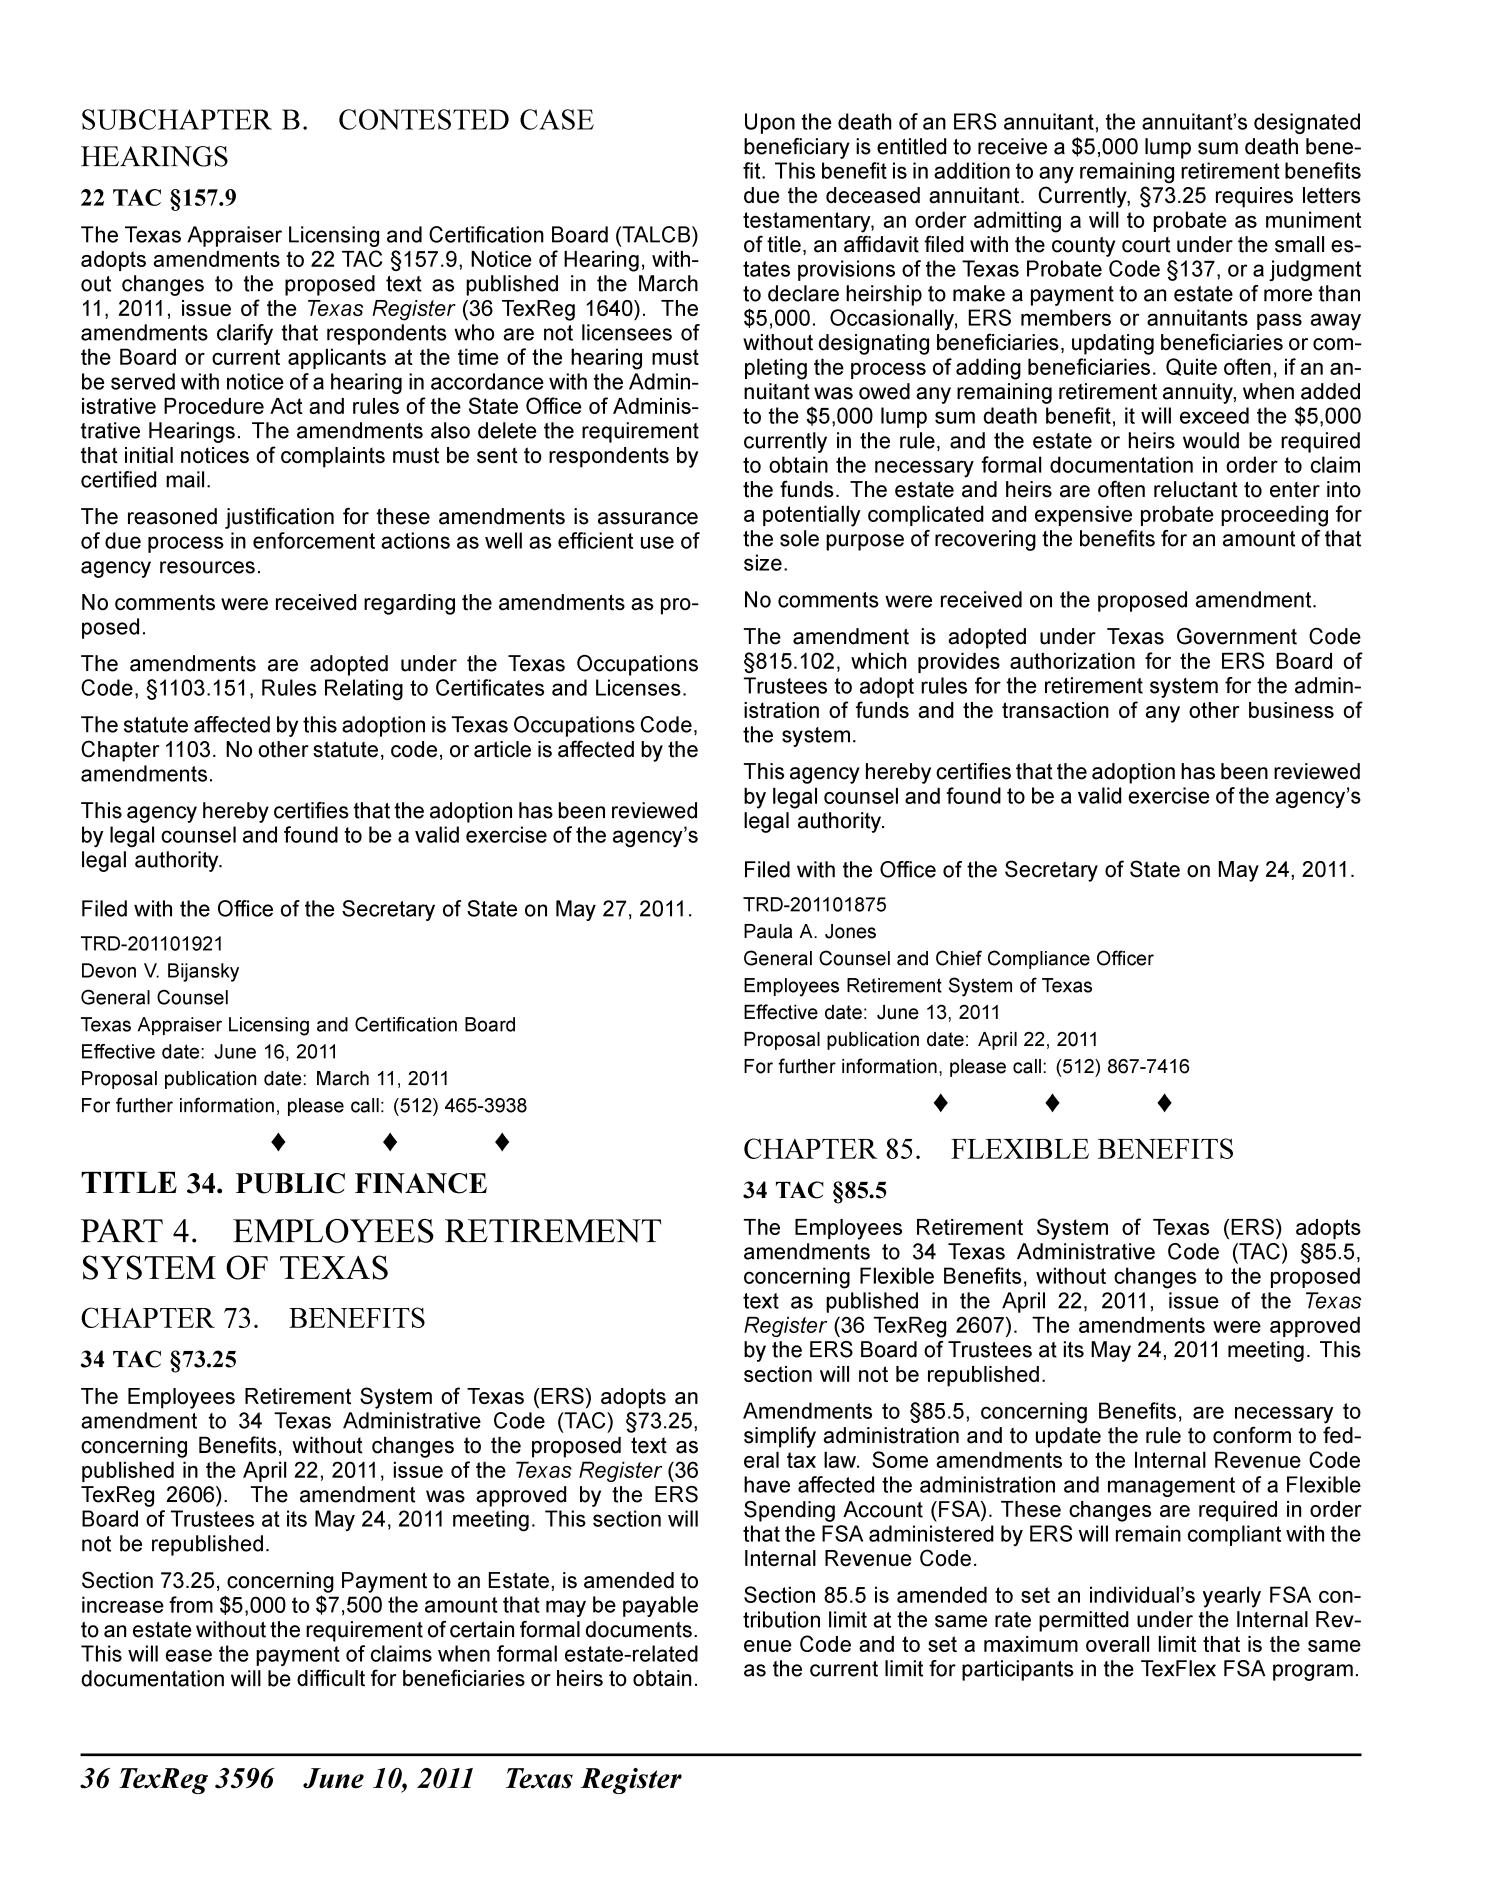 Texas Register, Volume 36, Number 23, Pages 3555-3666, June 10, 2011
                                                
                                                    3596
                                                